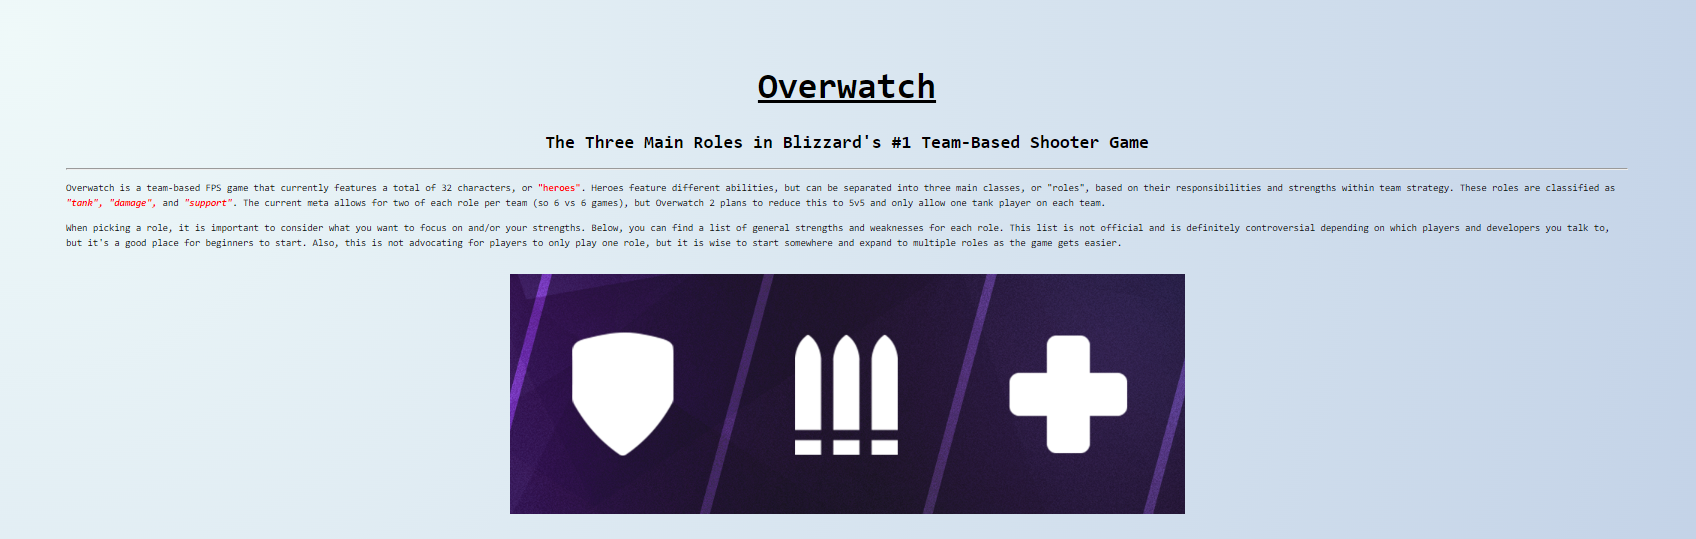 overwatch roles site image